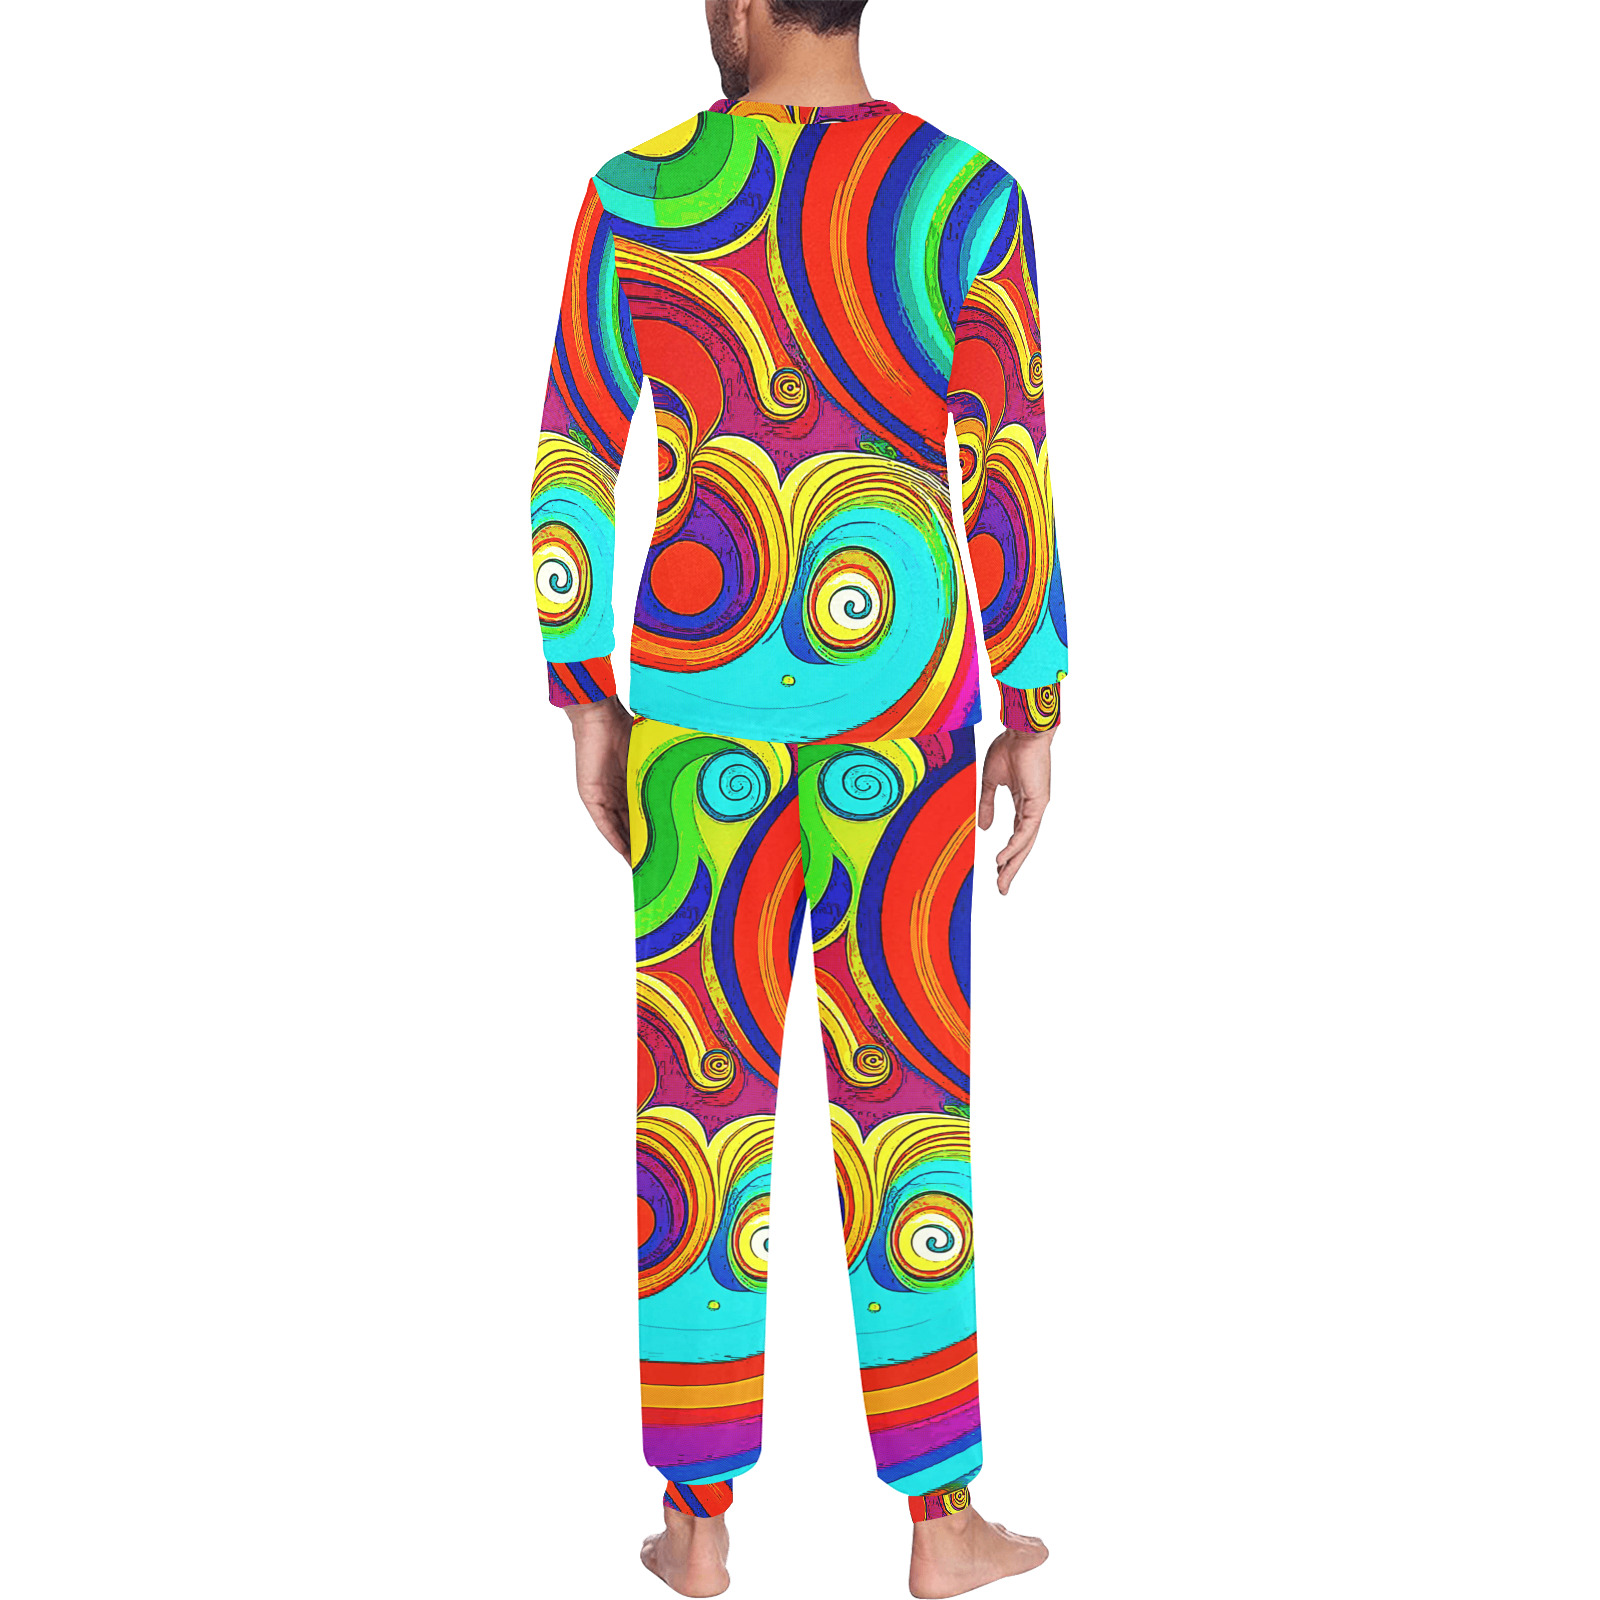 Colorful Groovy Rainbow Swirls Men's All Over Print Pajama Set with Custom Cuff